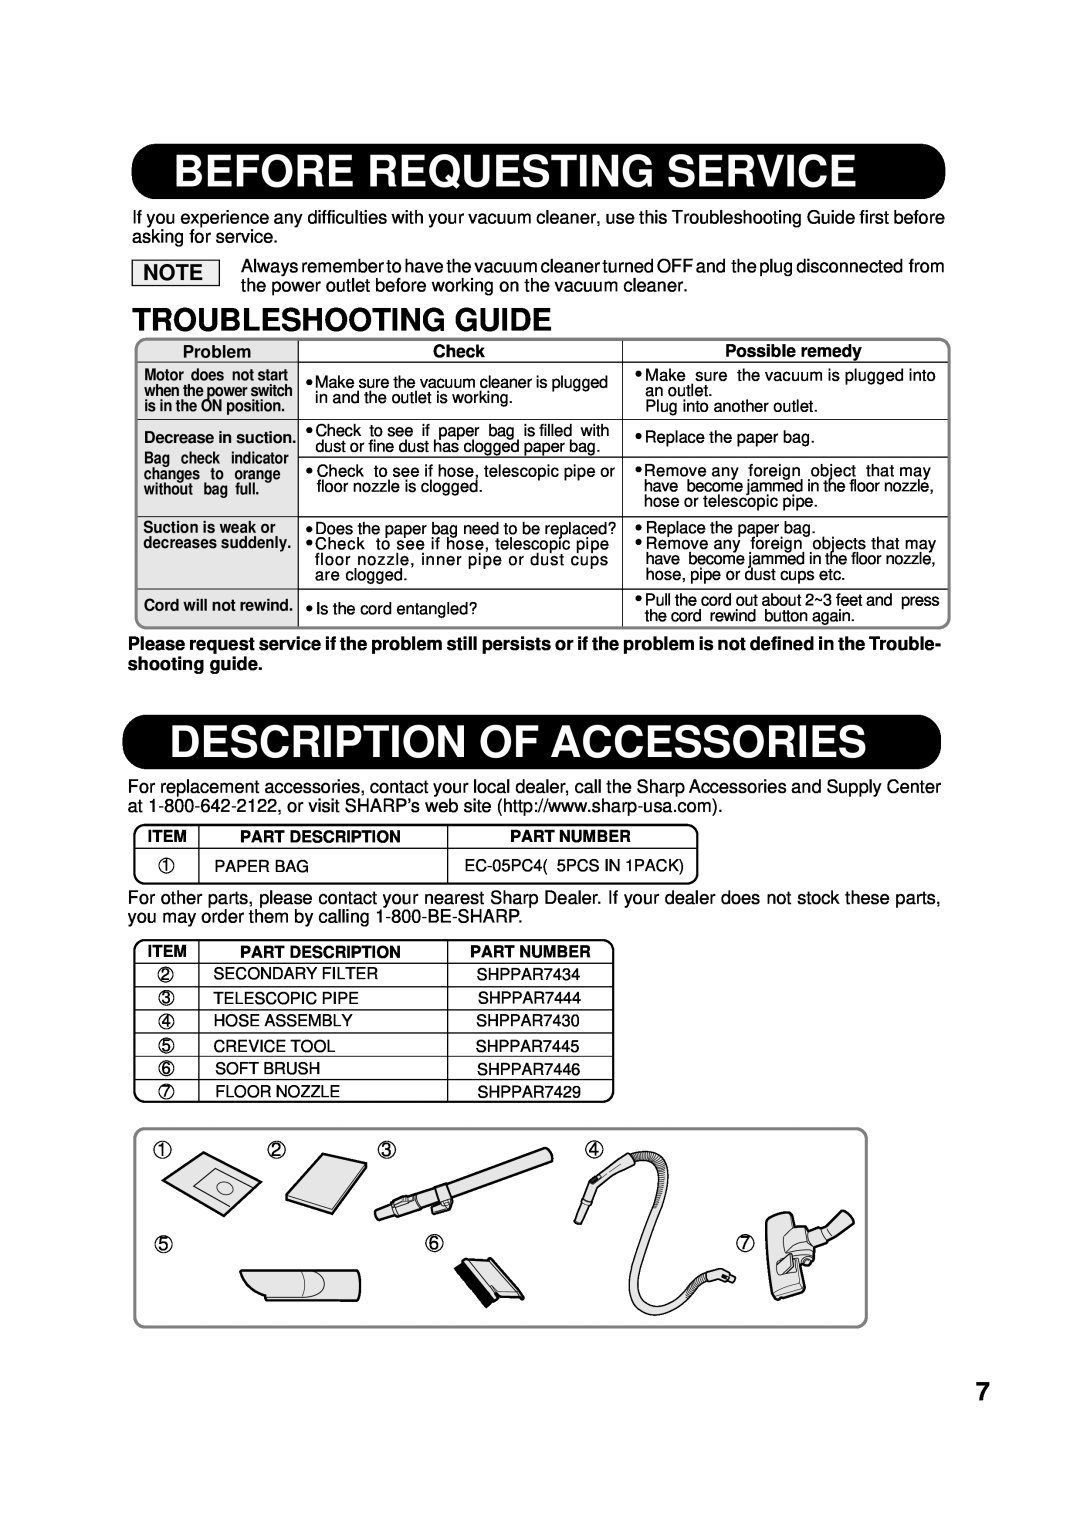 Sharp EC-6312P Before Requesting Service, Description Of Accessories, Troubleshooting Guide, Problem, Check 